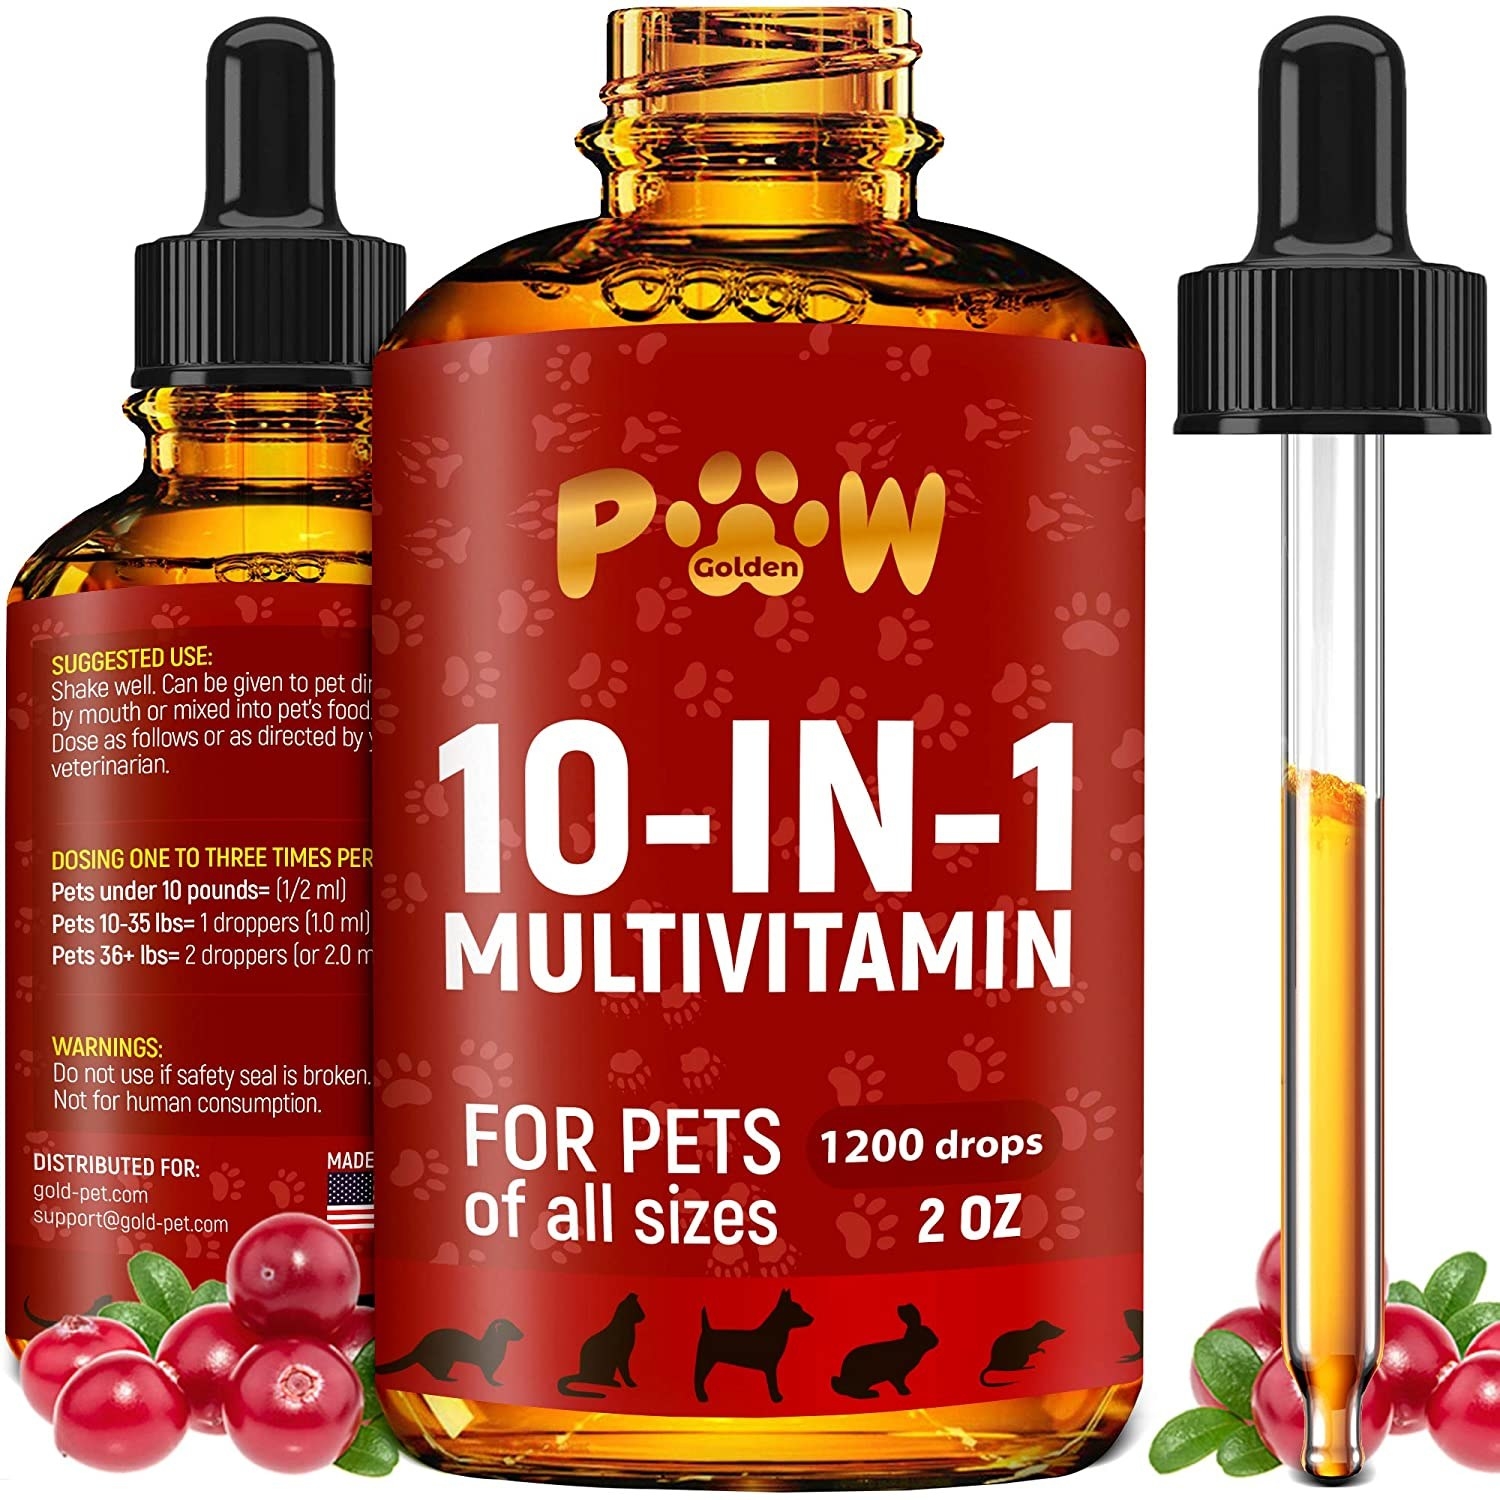 The senior cat and dog cranberry multi-vitamin supplement 